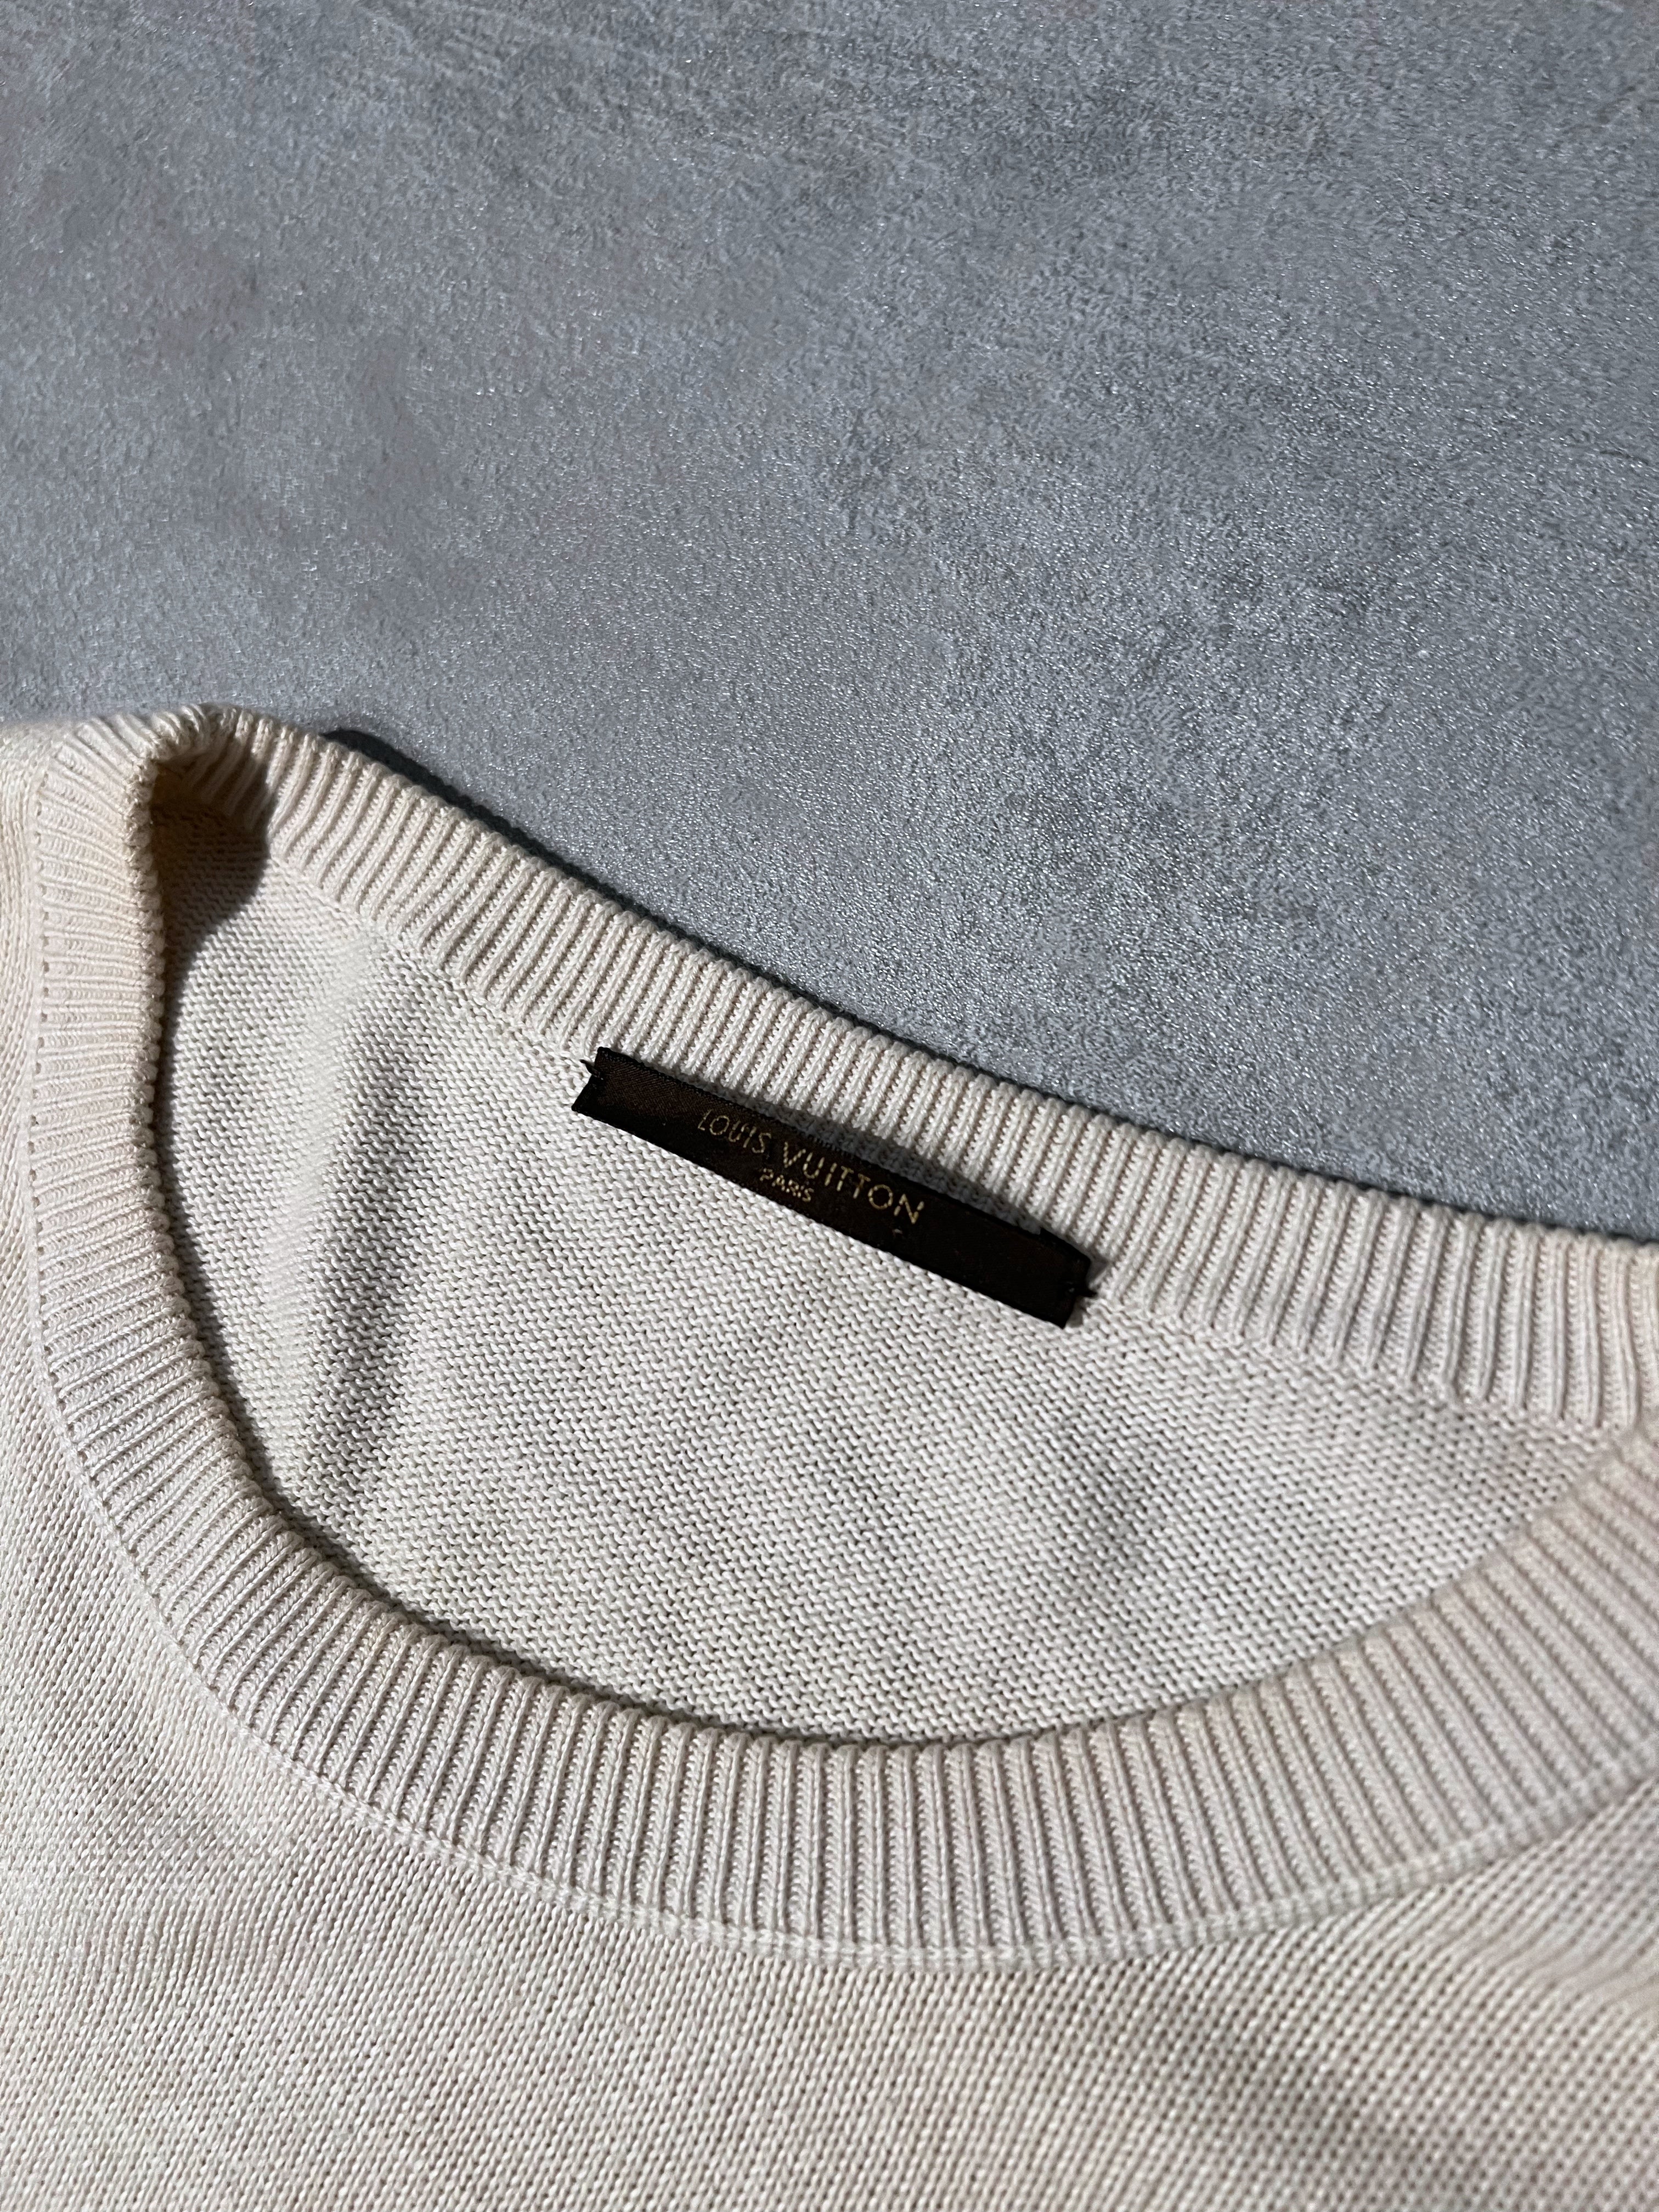 Louis Vuitton Off White Striped Wool Short Sleeve Sweater L Louis Vuitton